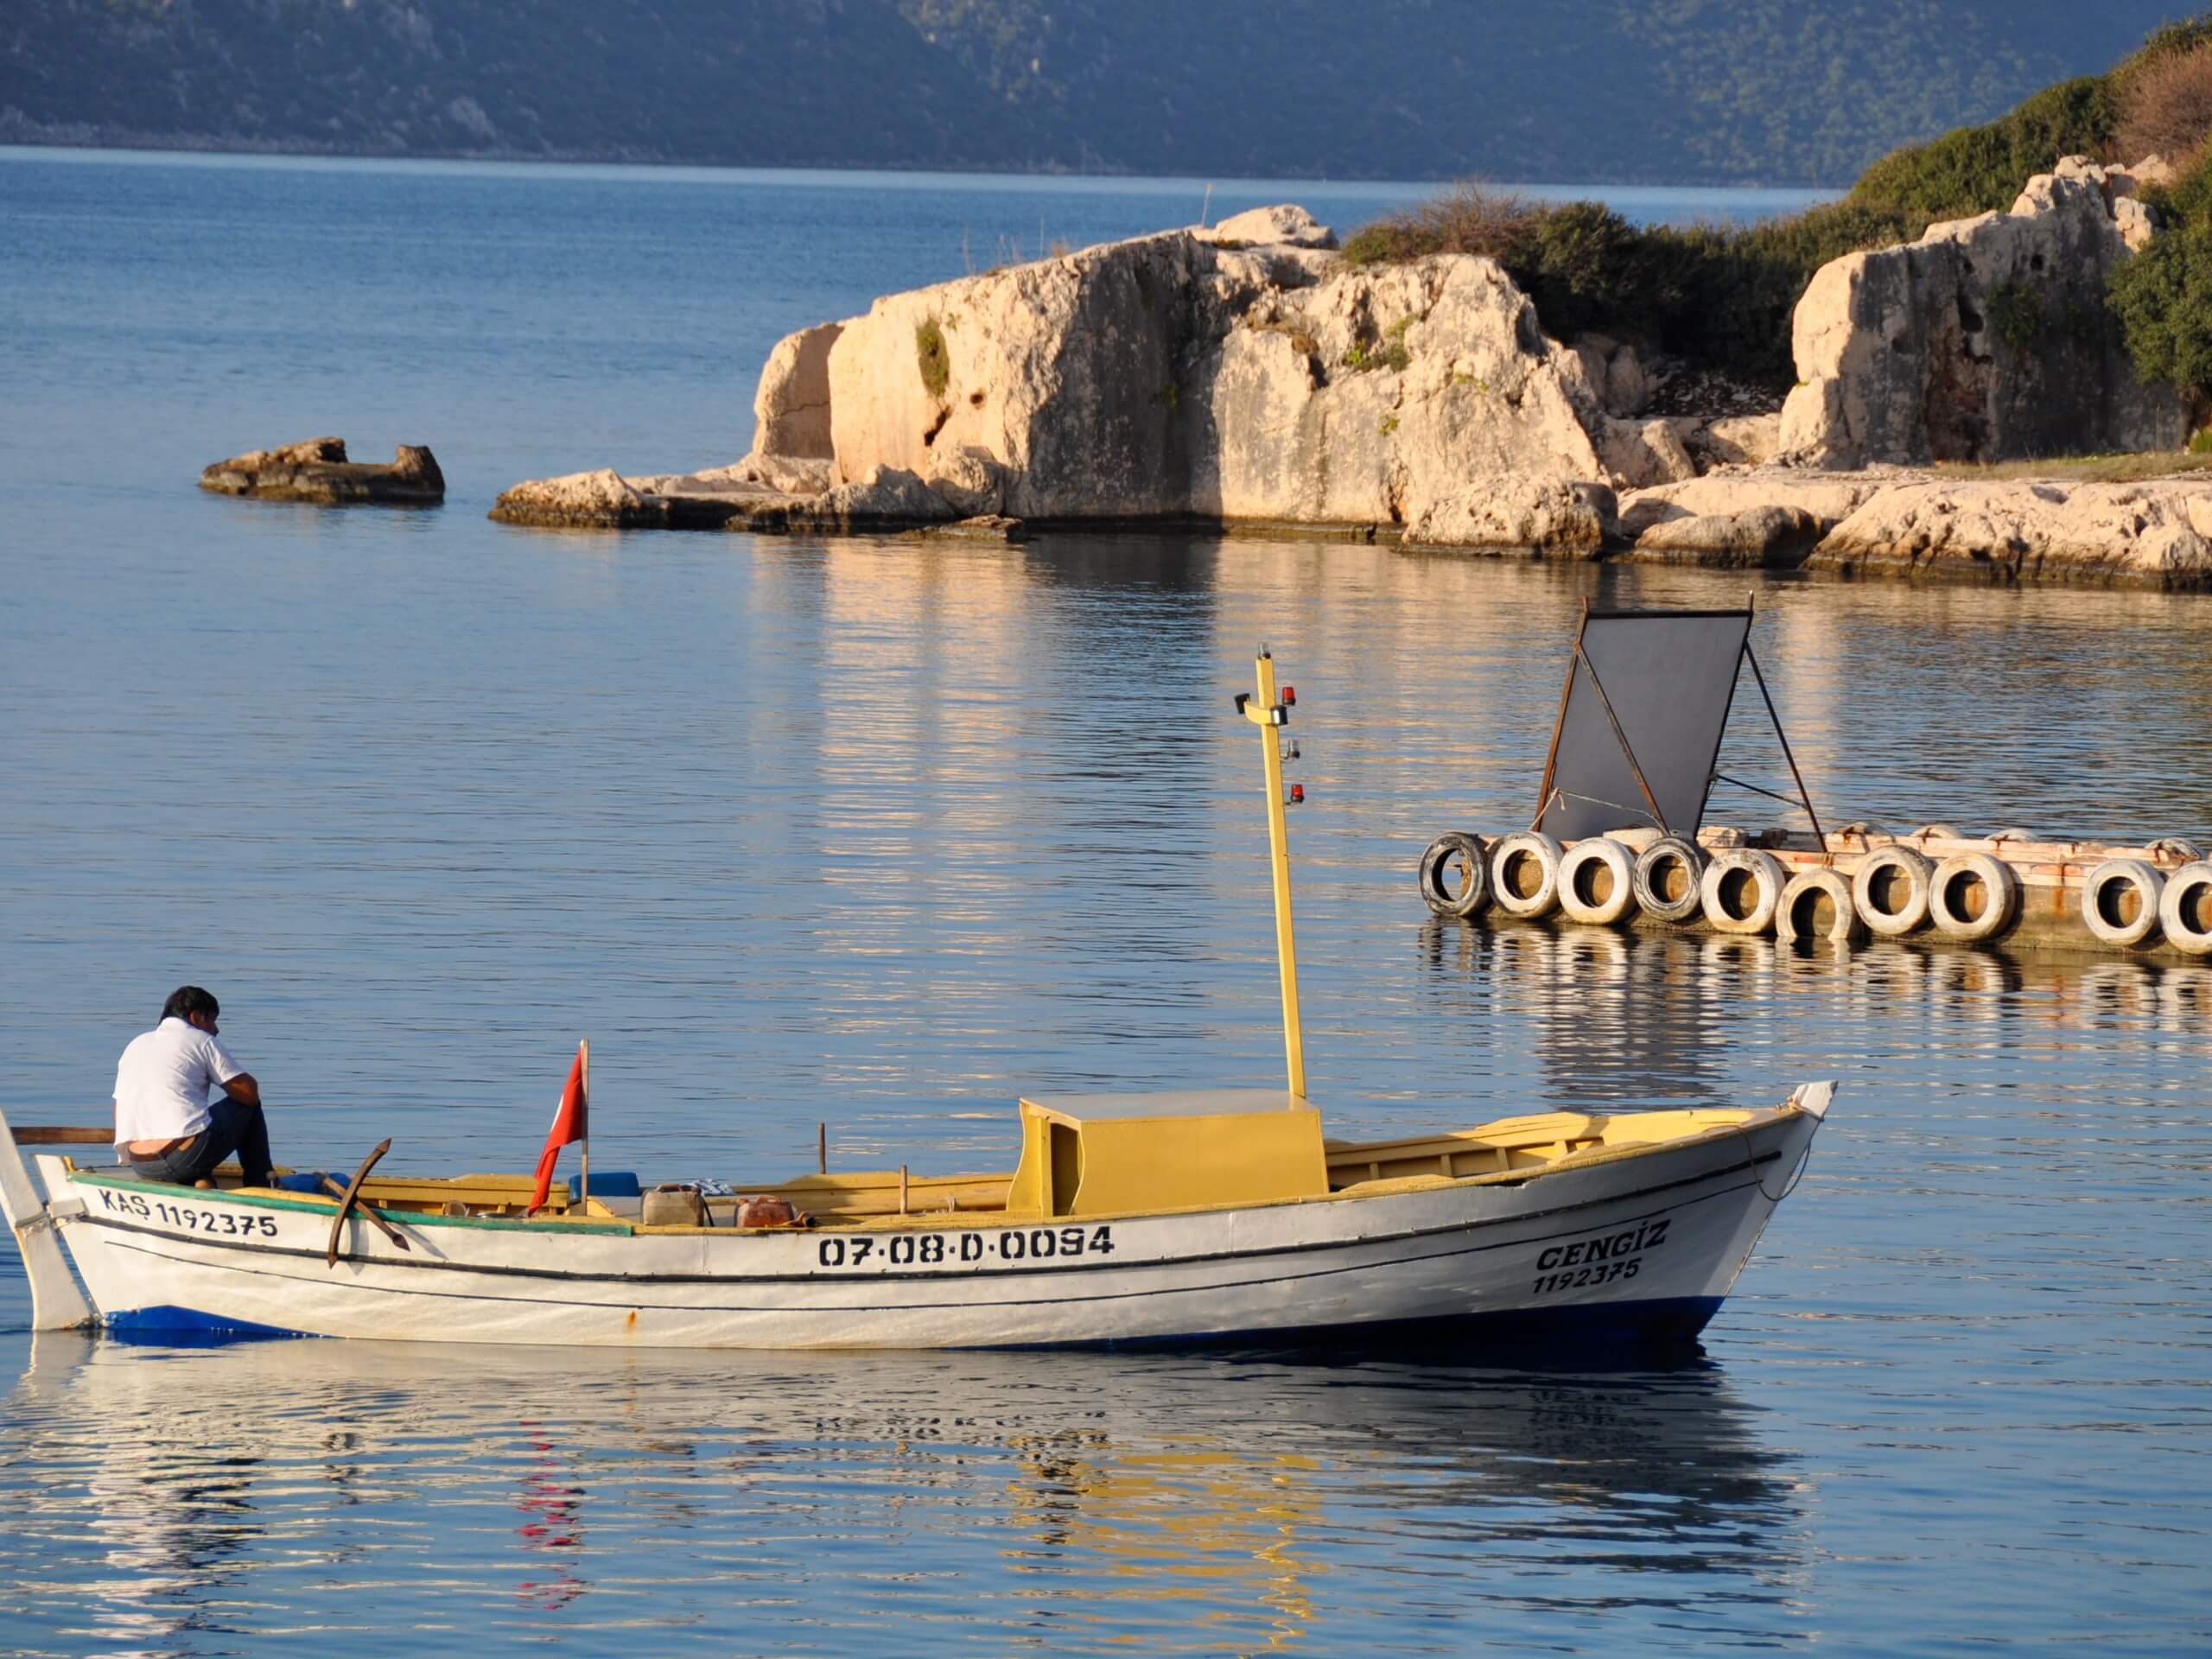 Boat seen along the Turkish Coast while walking the Lycian Way